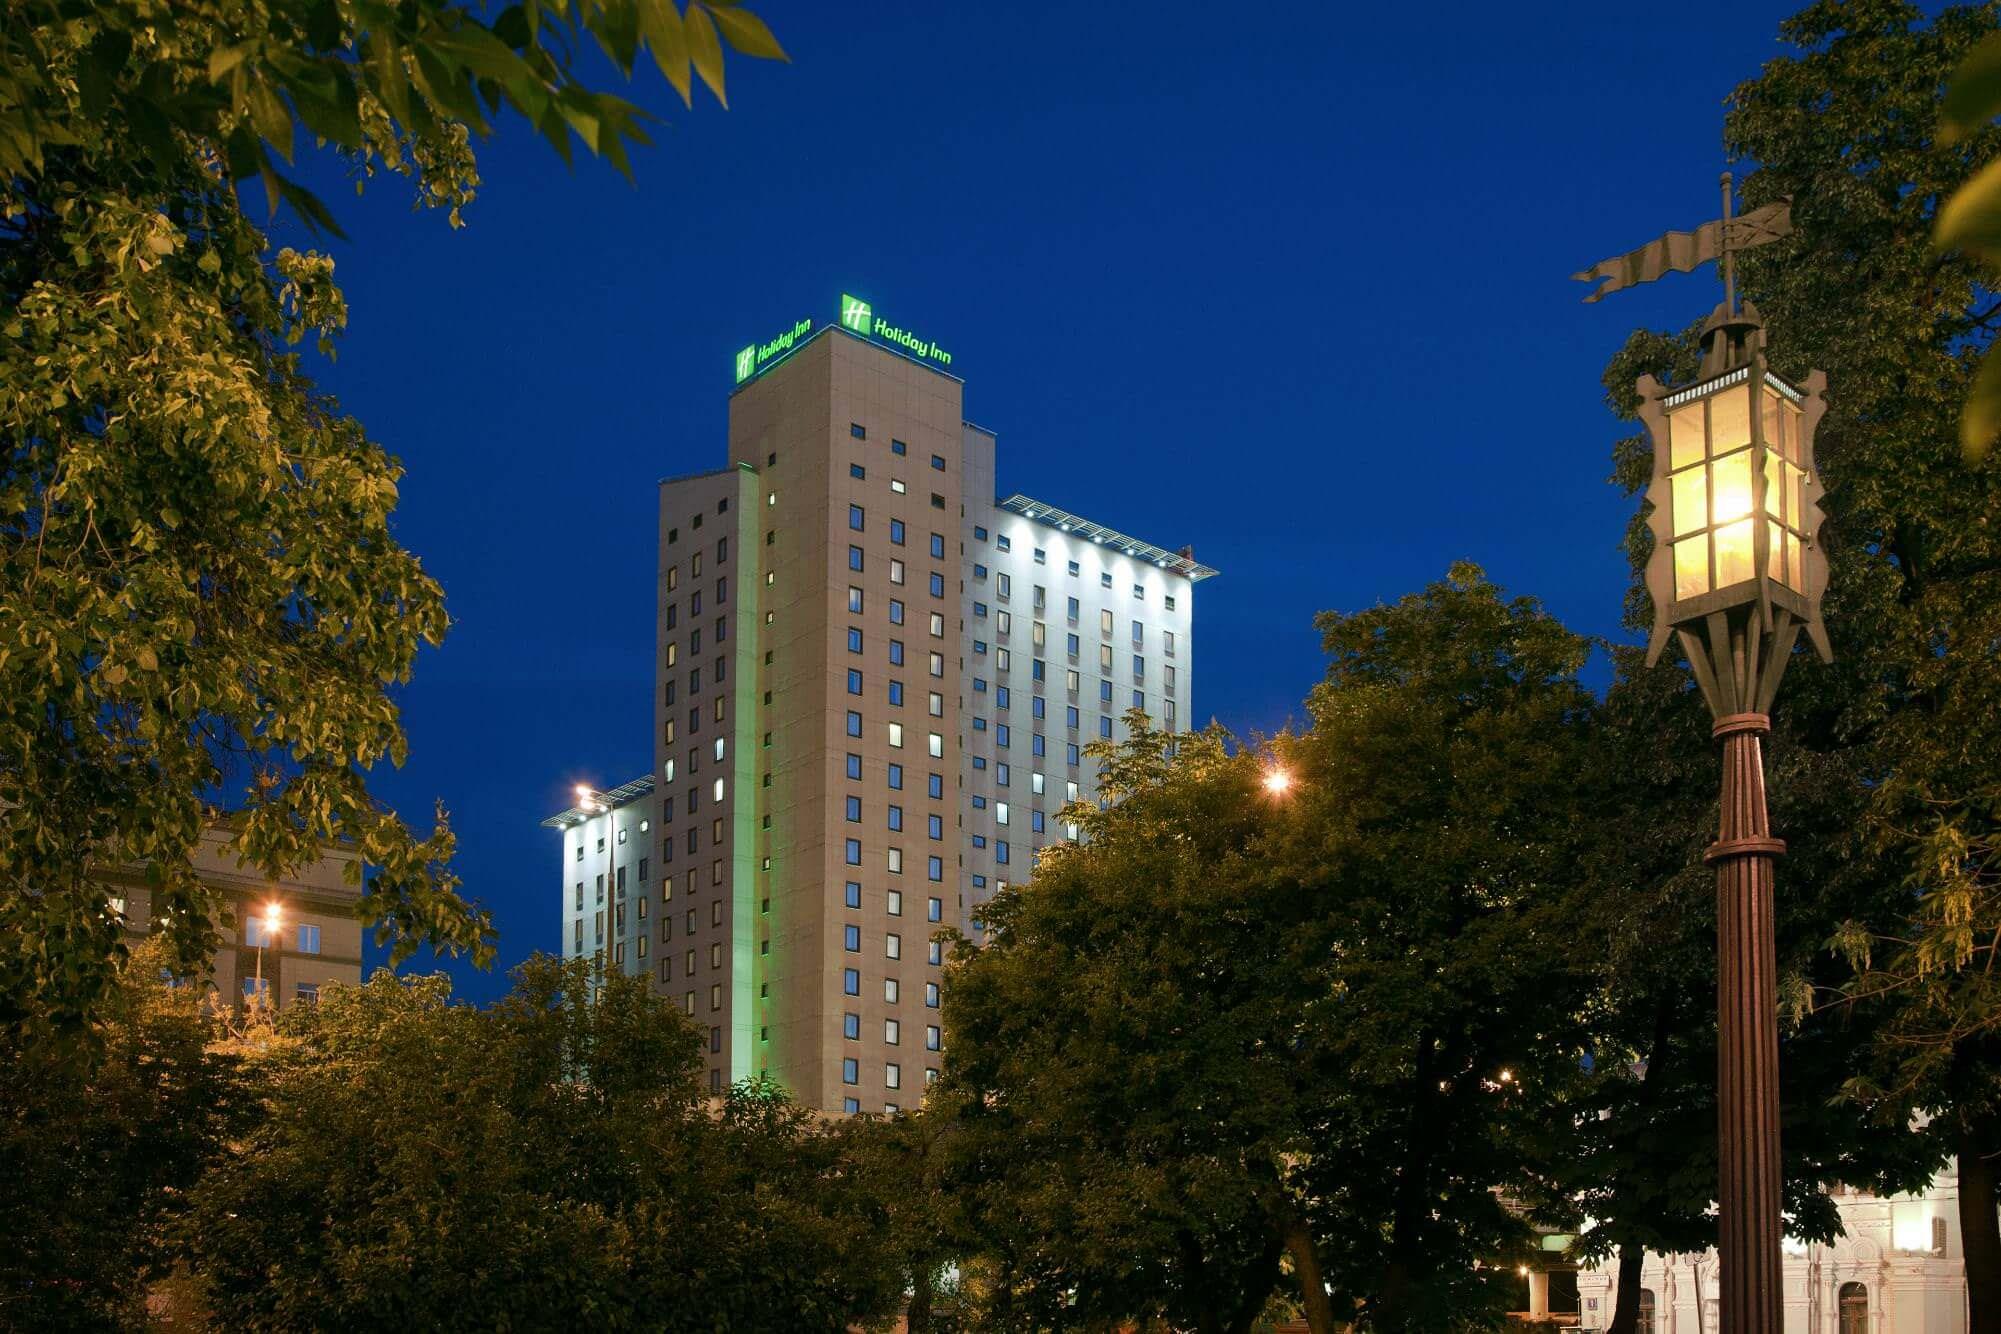 Holiday Inn Moscow - Suschevsky 4*